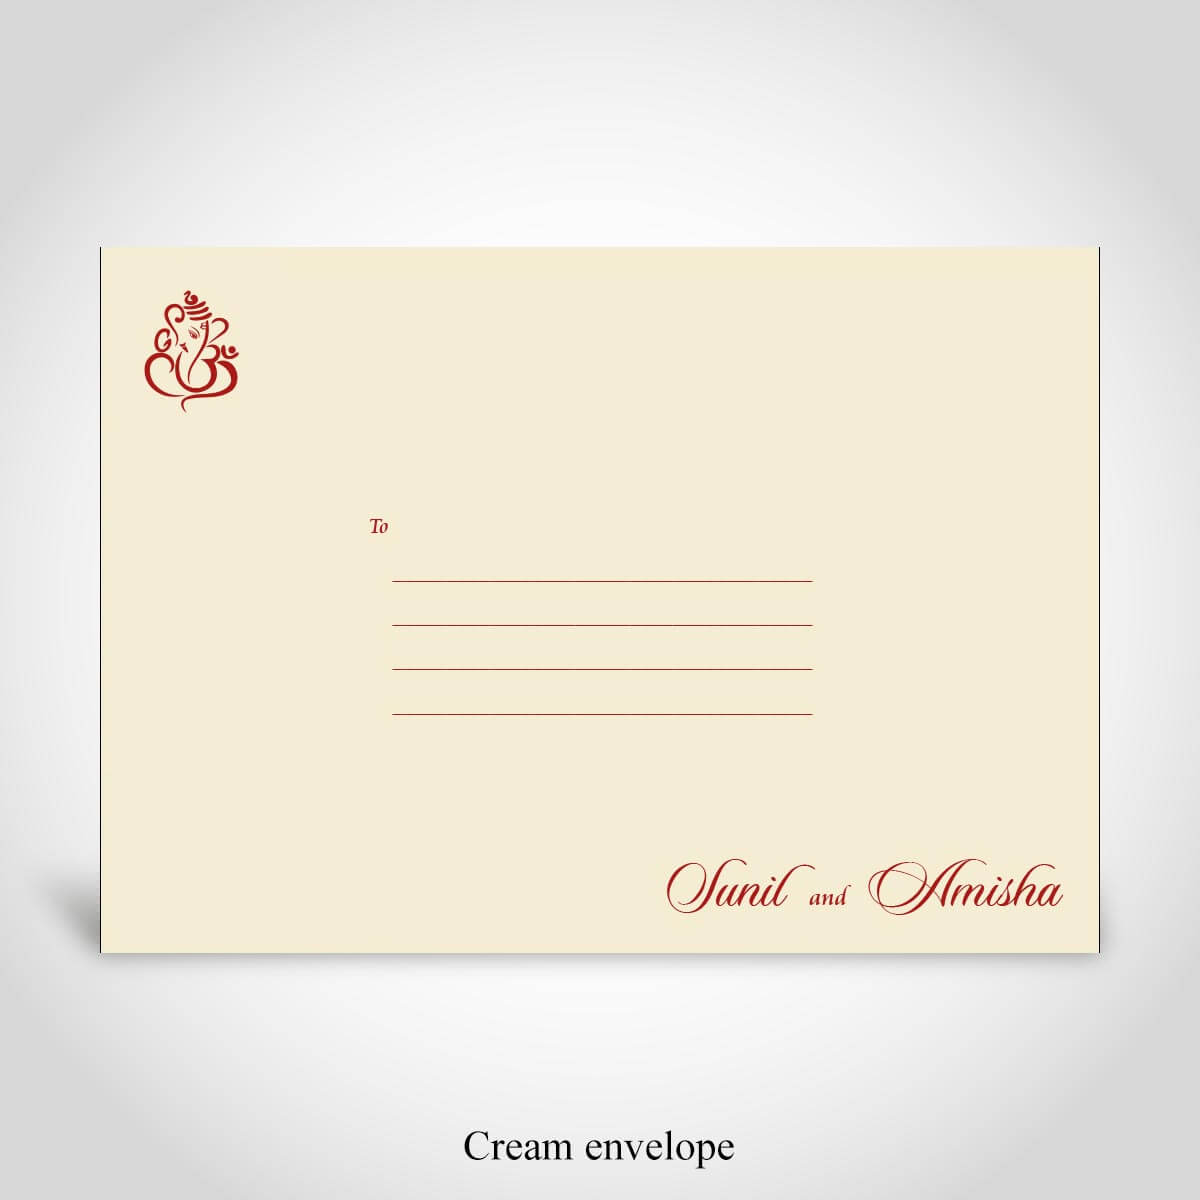 Dark Red, Gold Foiled Hindu Wedding Card – CFK450